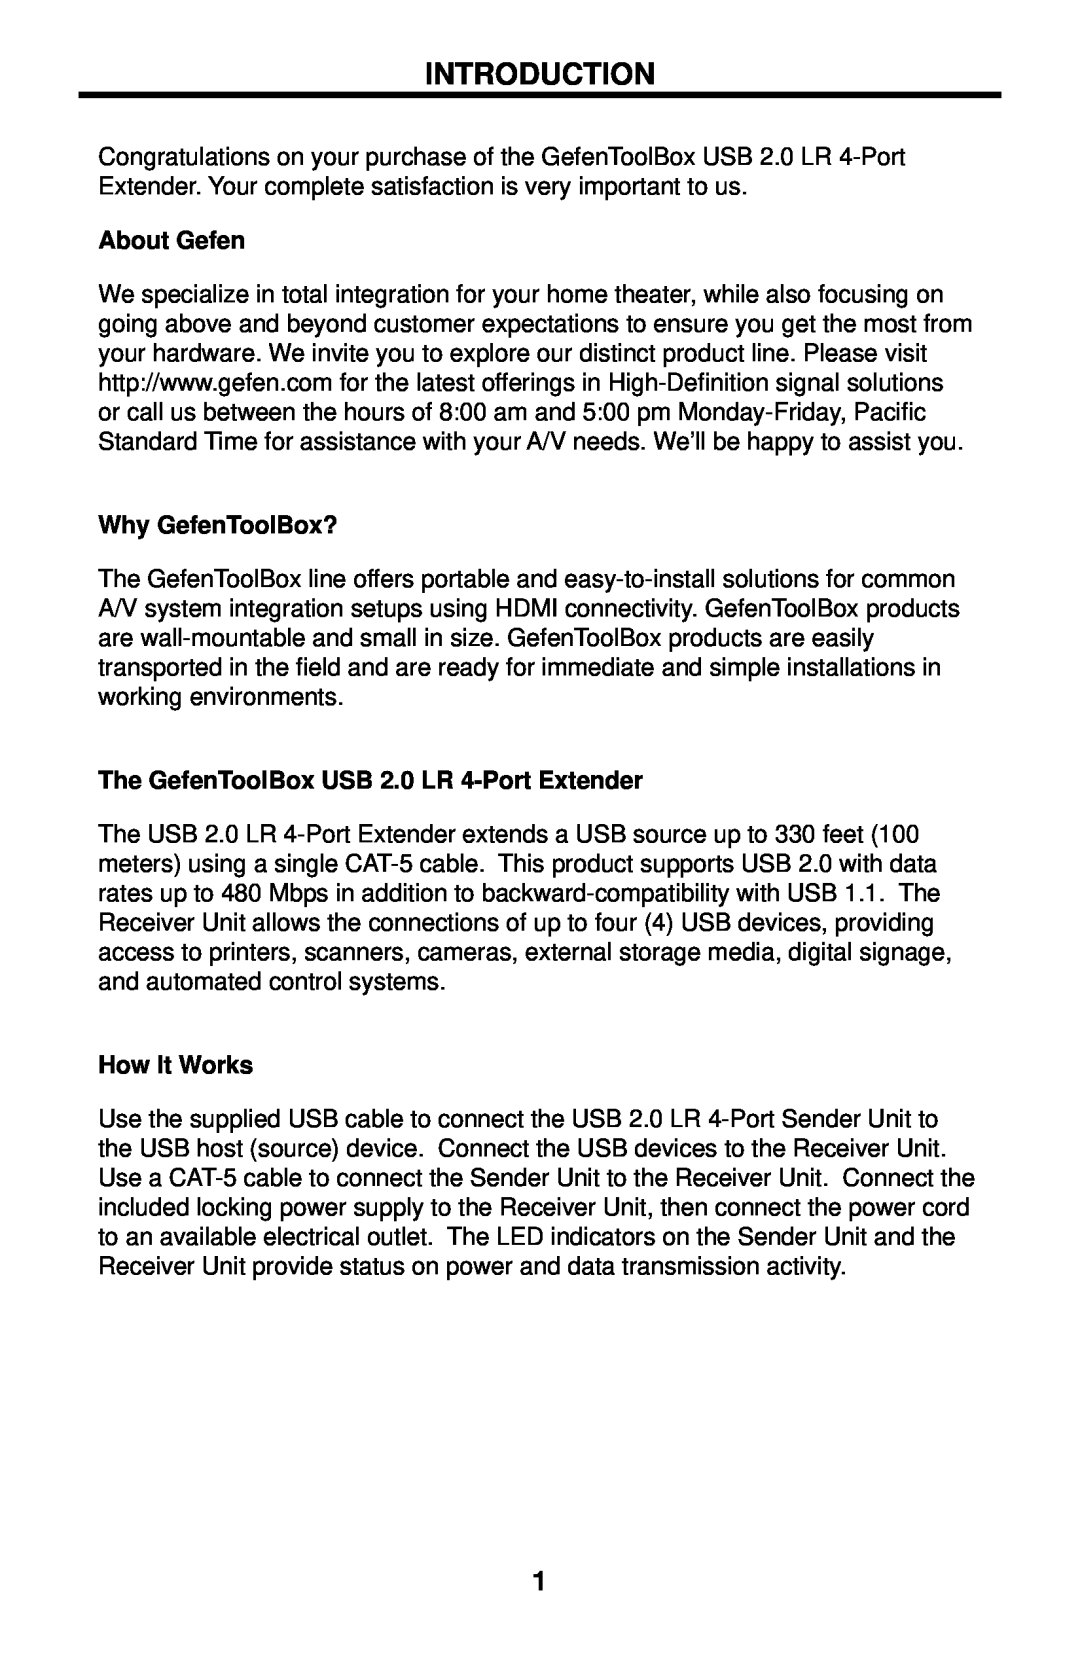 Gefen GTB-USB2.0-4LR user manual Introduction, About Gefen, Why GefenToolBox?, The GefenToolBox USB 2.0 LR 4-Port Extender 